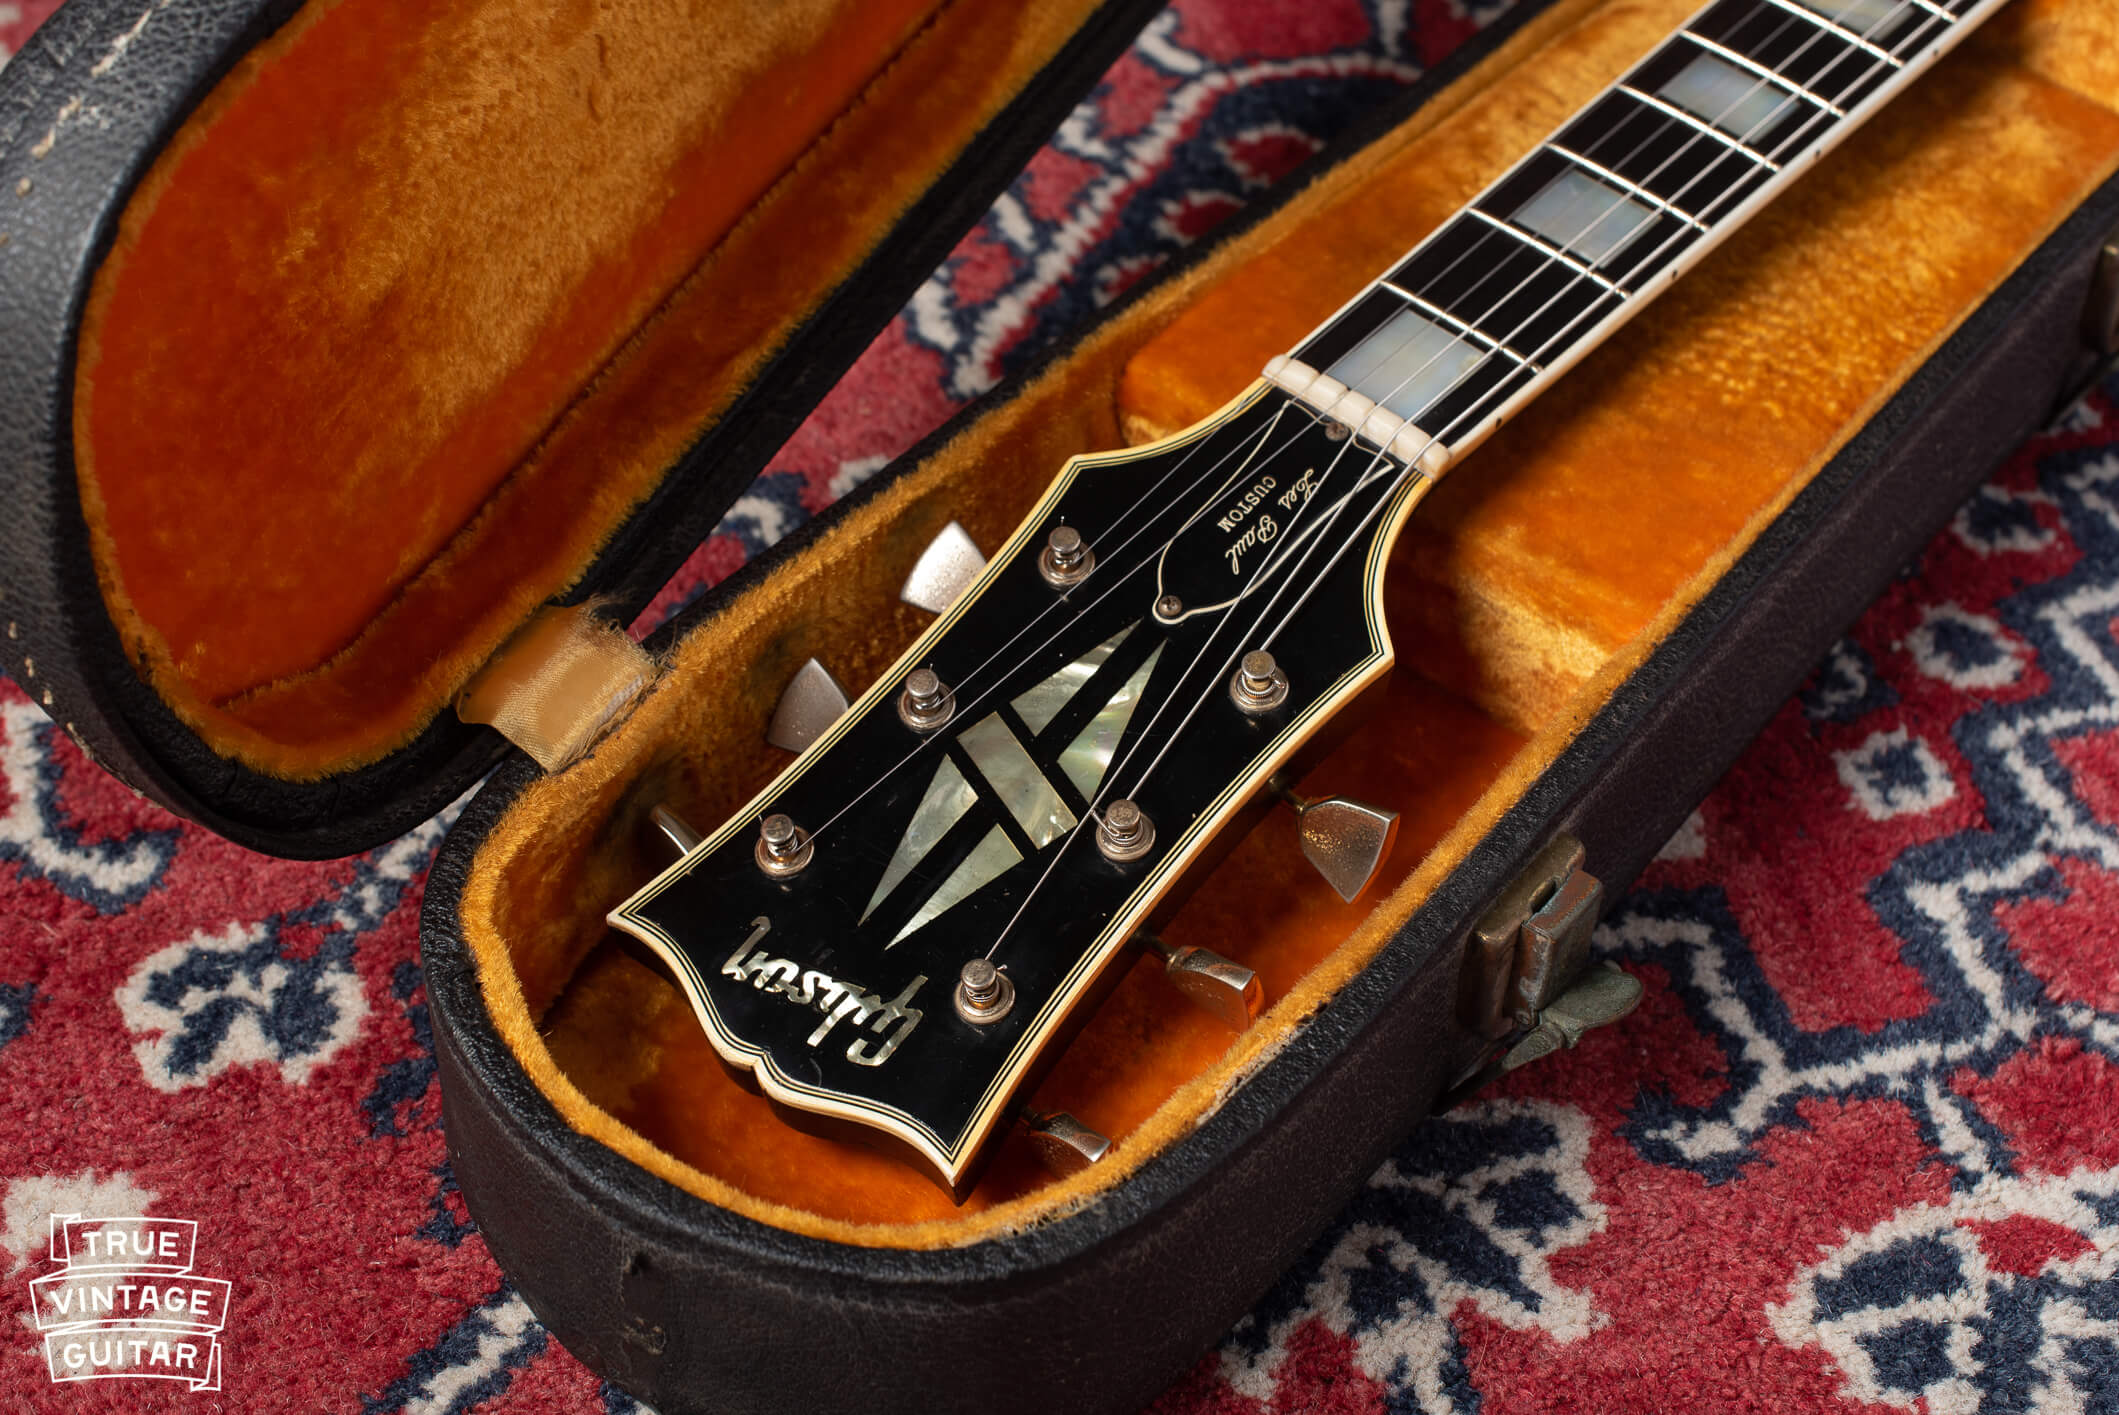 Gibson Les Paul Custom headstock with large pearl split diamond inlay